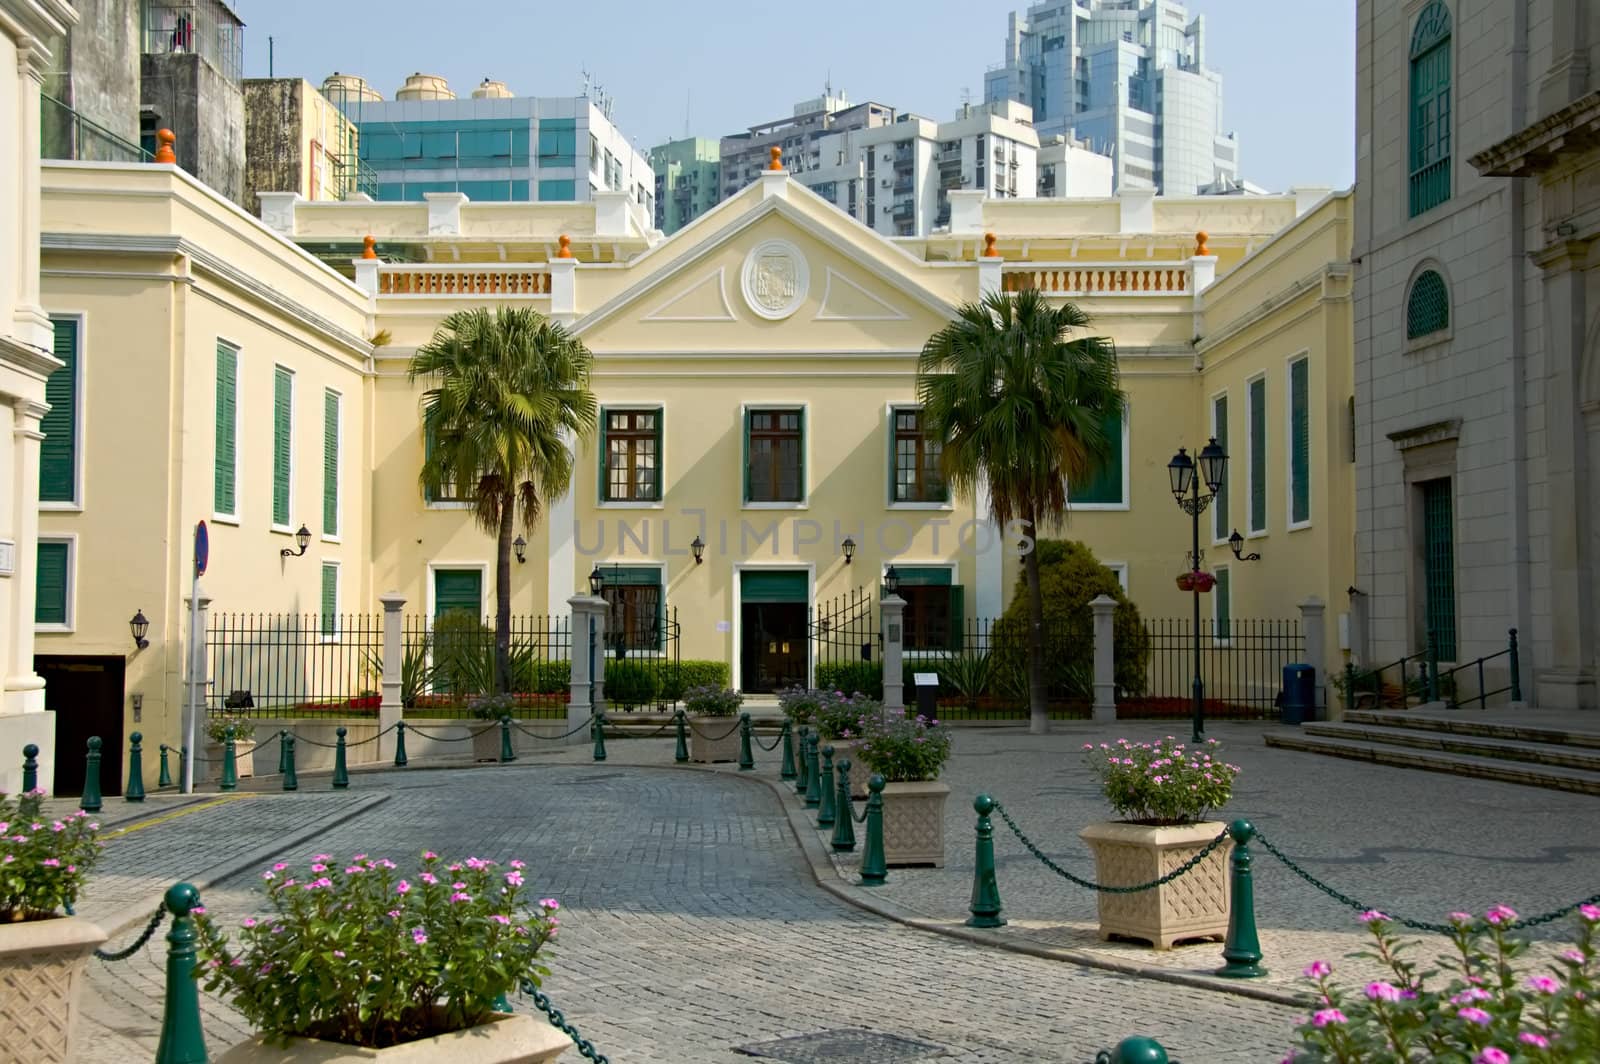 A view of classical chruch architecture in Macau